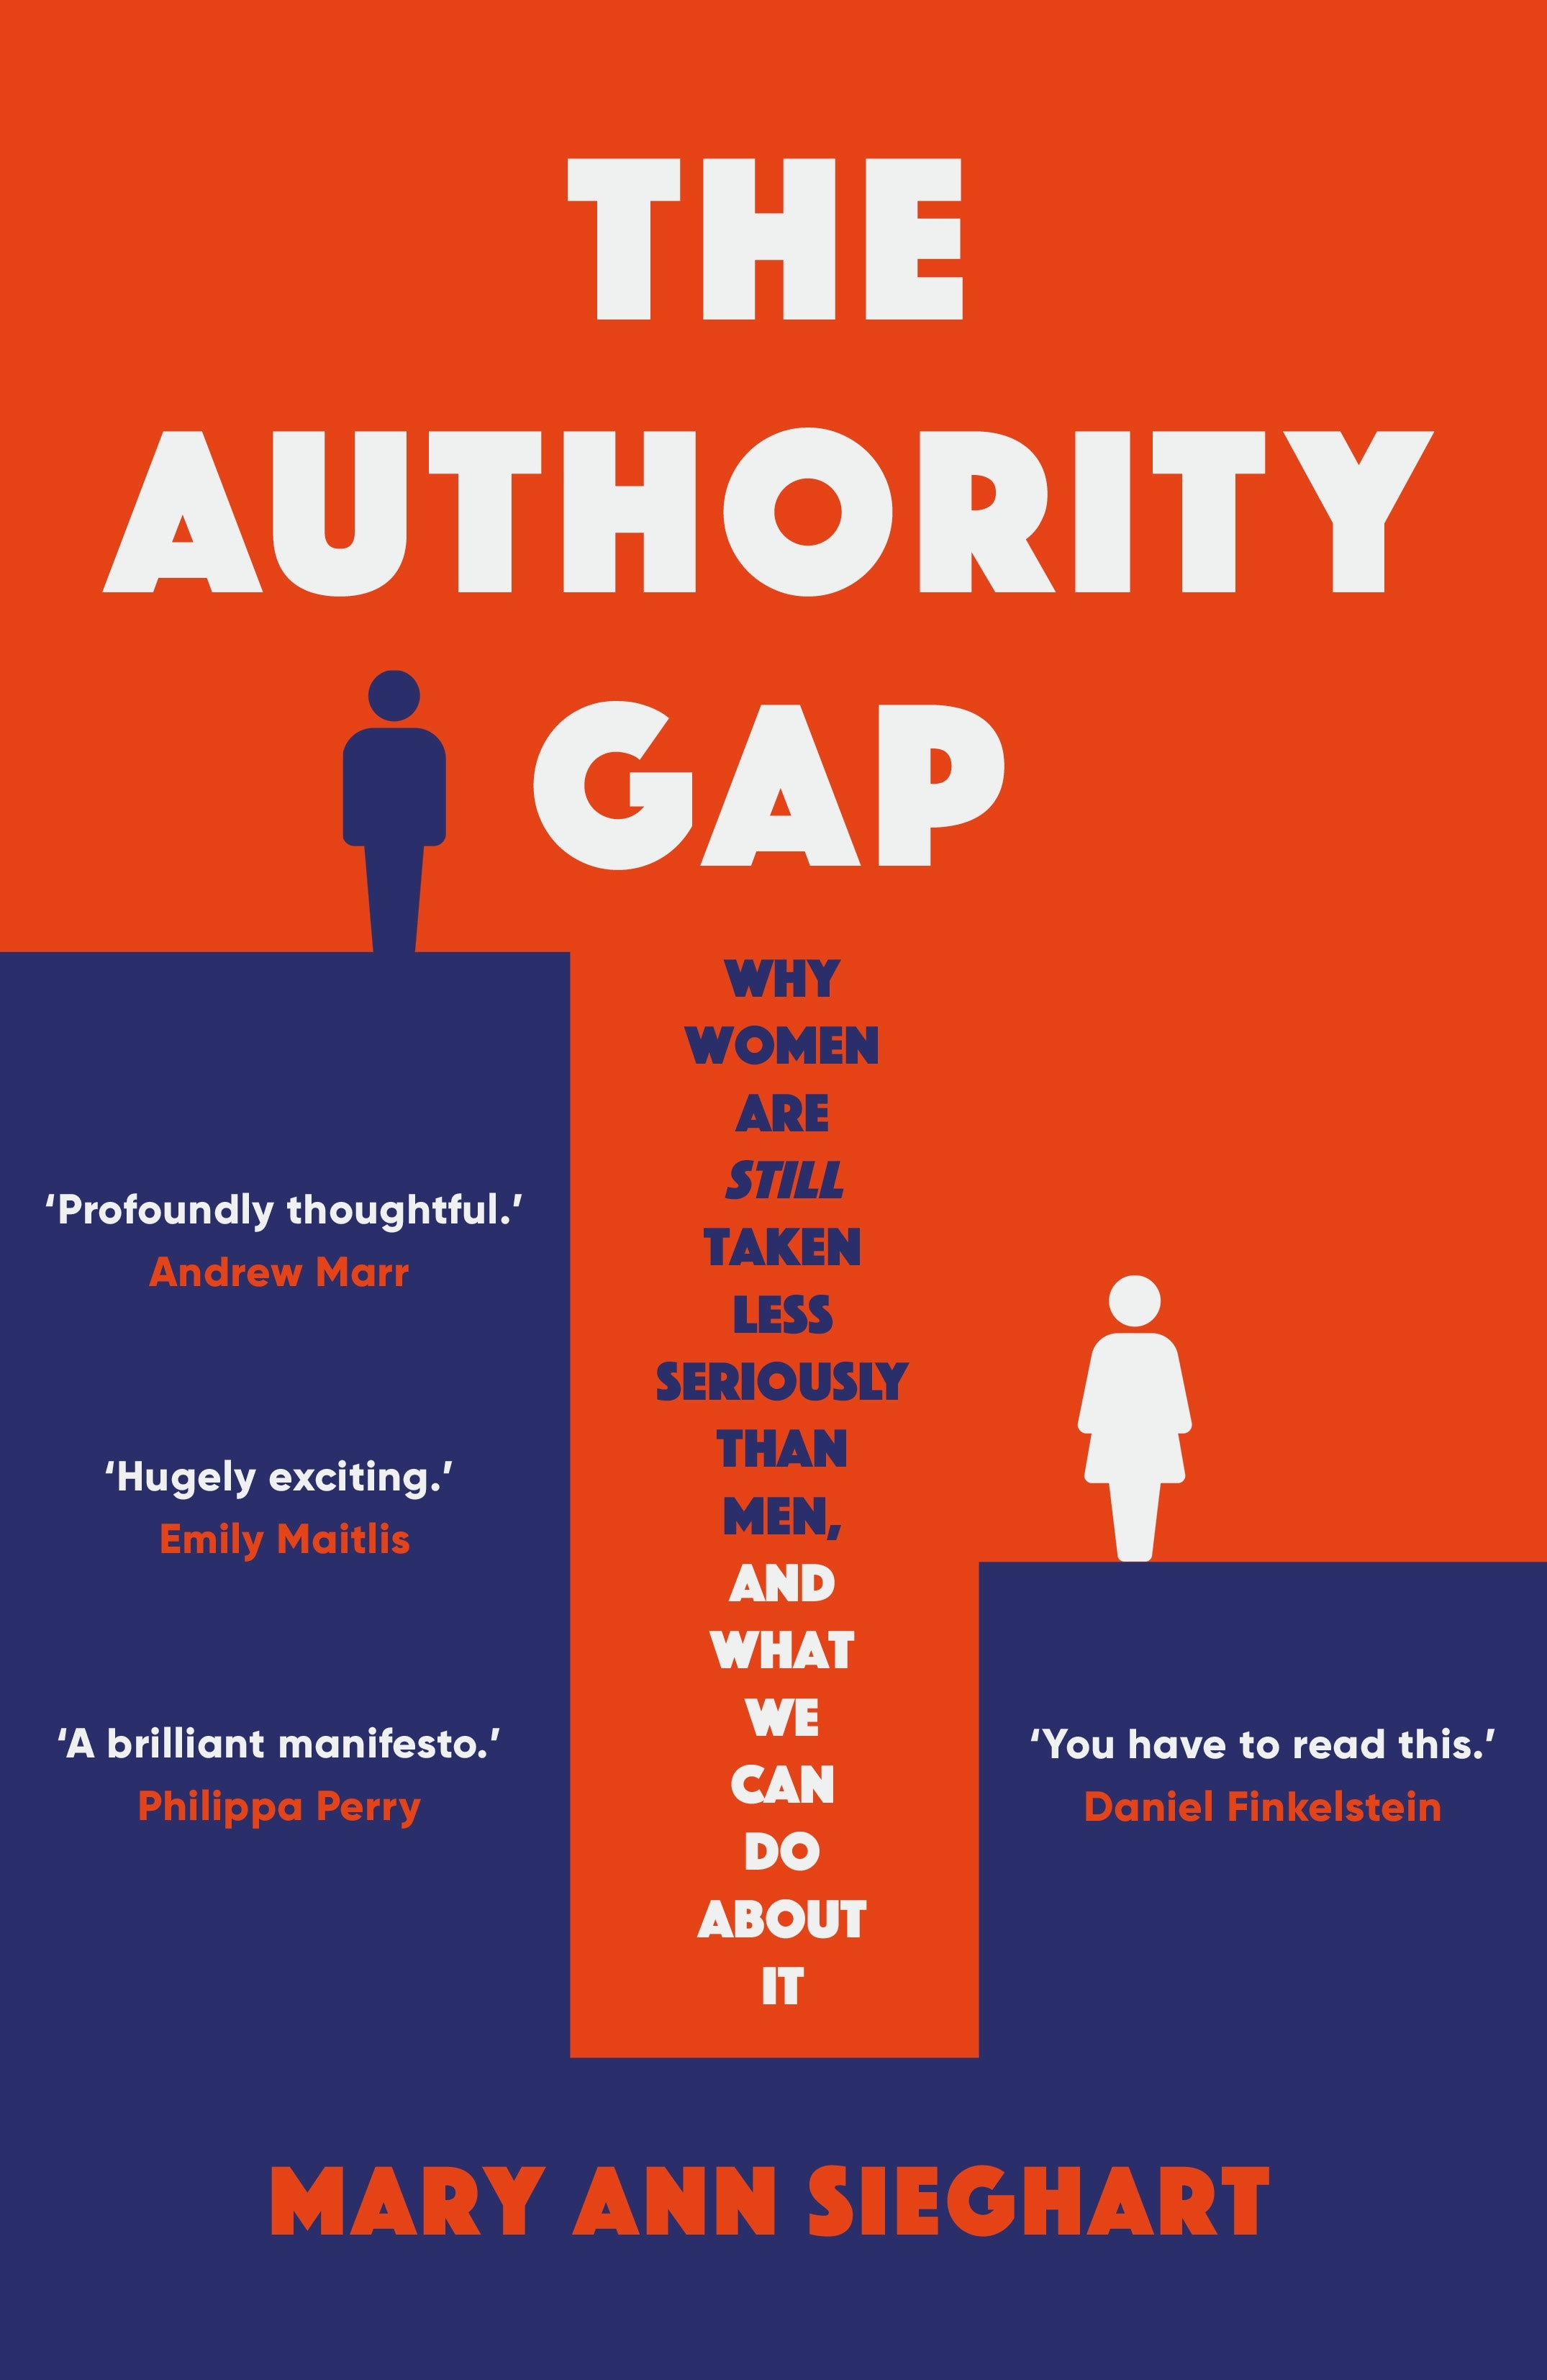 Book “The Authority Gap” by Mary Ann Sieghart — July 1, 2021